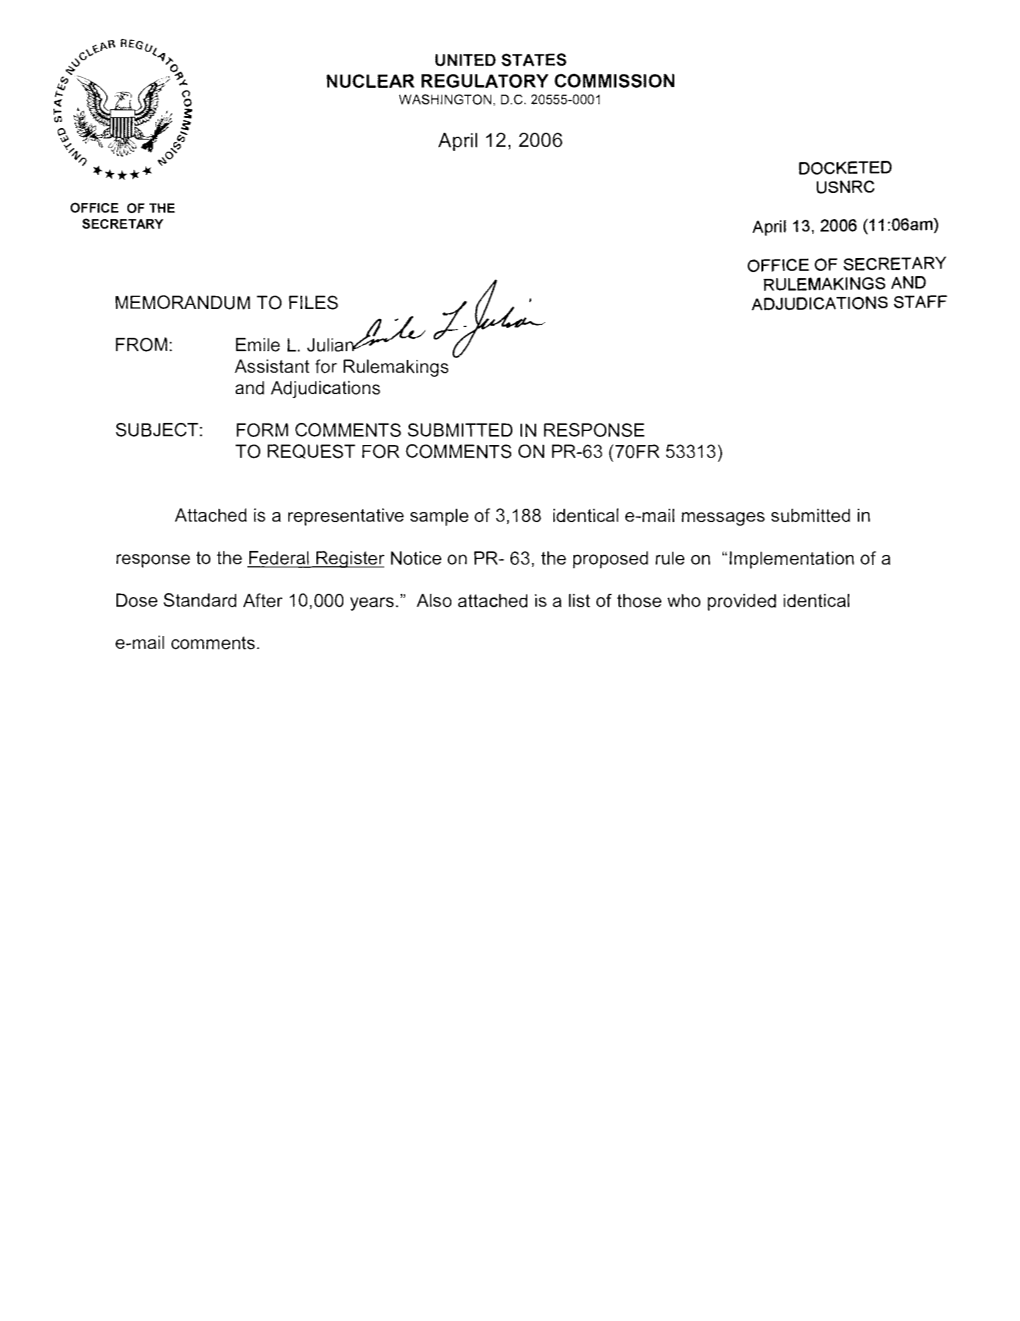 2006/04/12-Memorandum to Files from Emile L. Julian Re Form